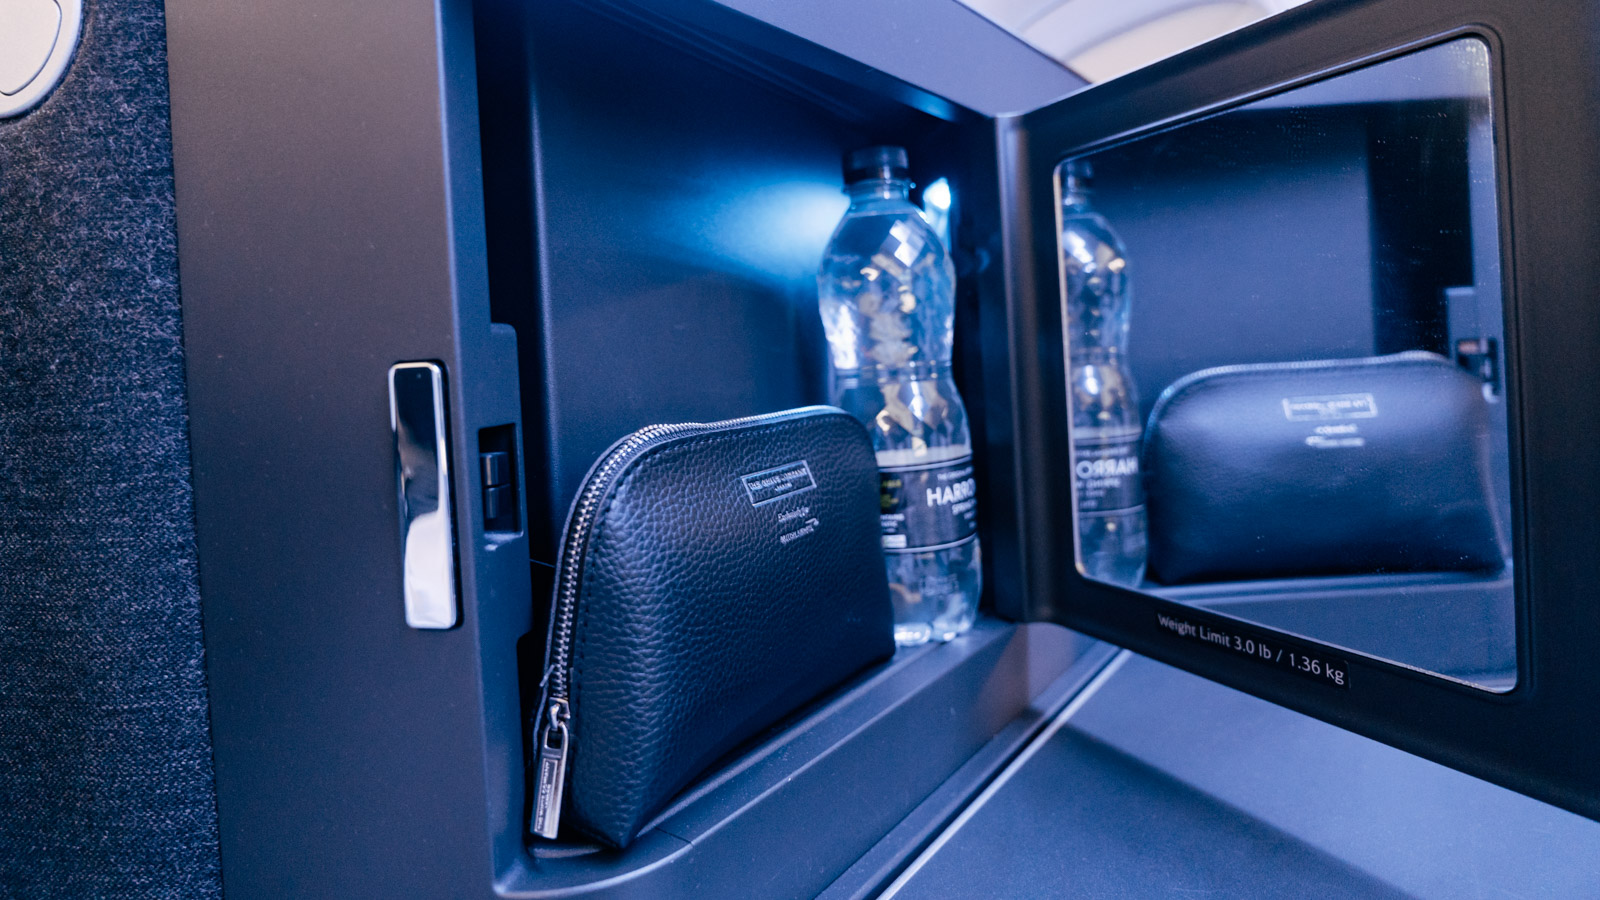 British Airways Club Suites amenity kit storage